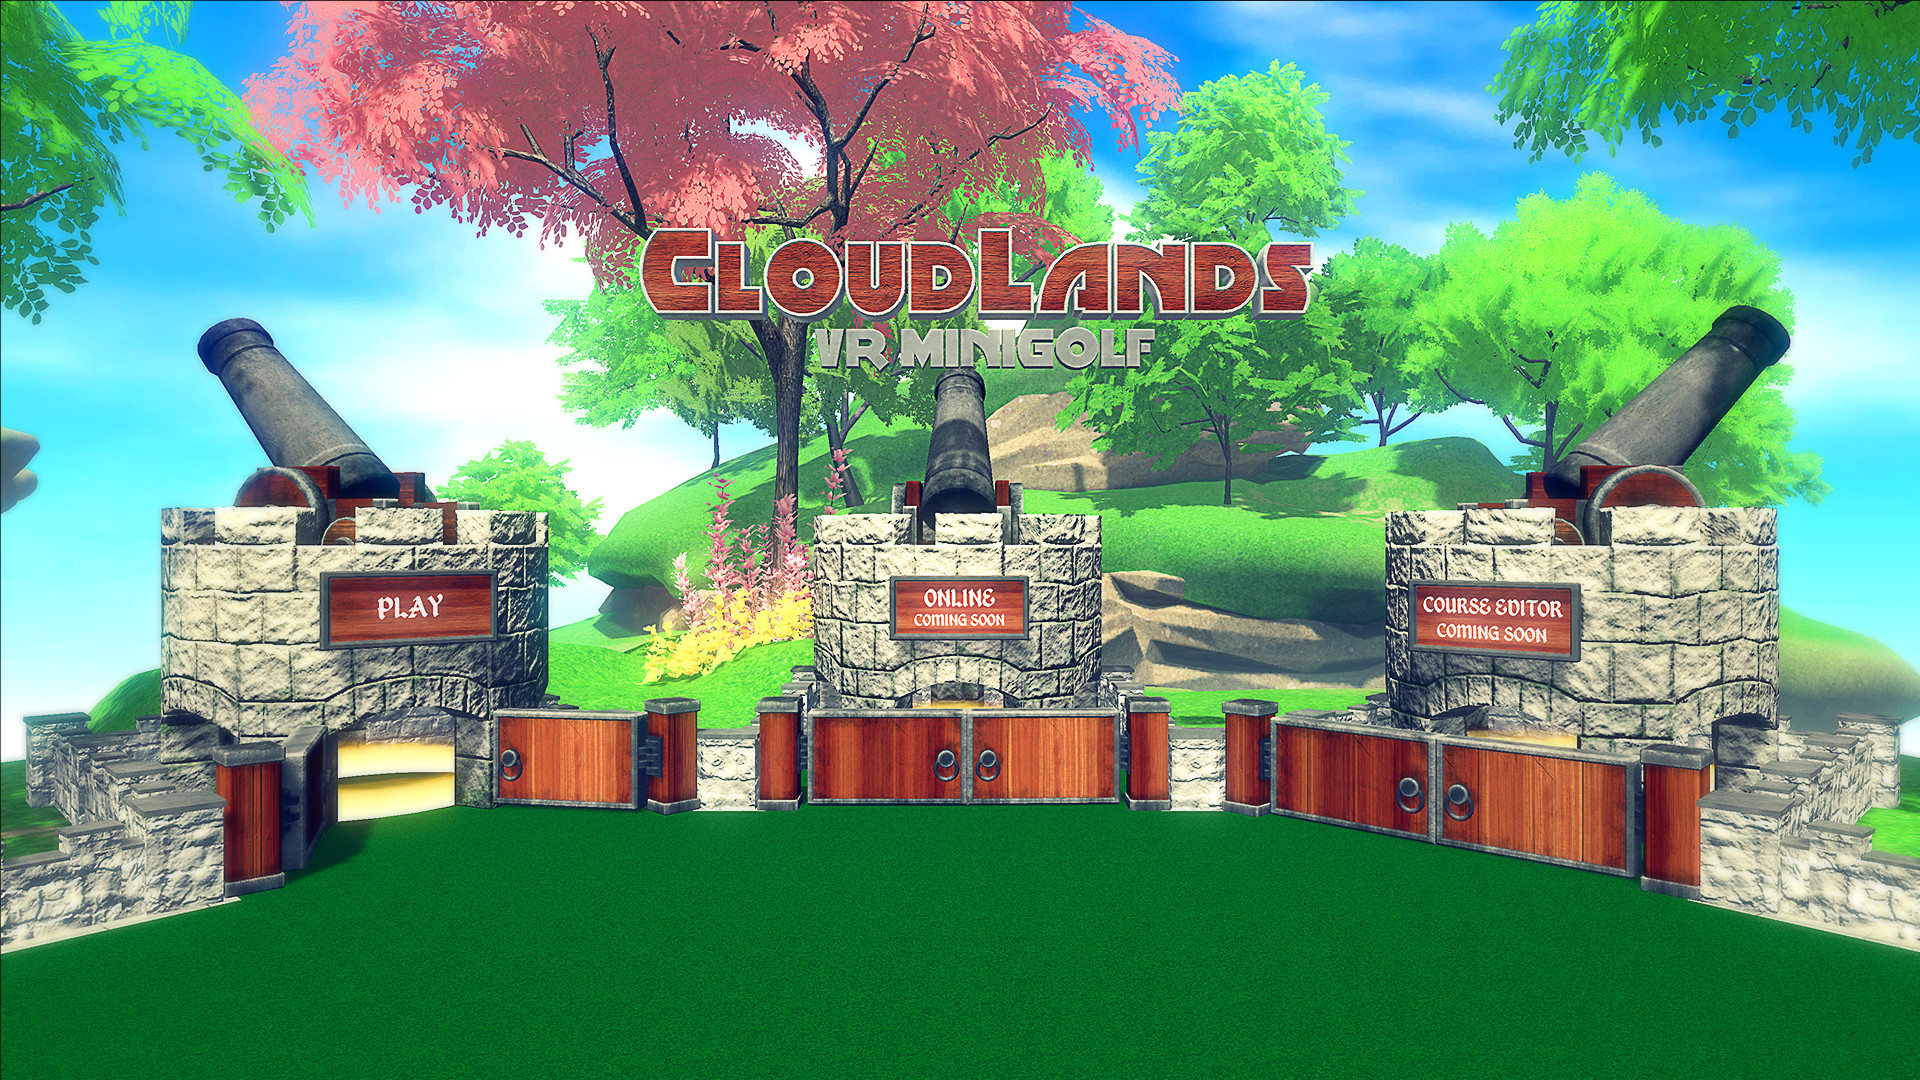 Cloudlands  VR Minigolf Resimleri 